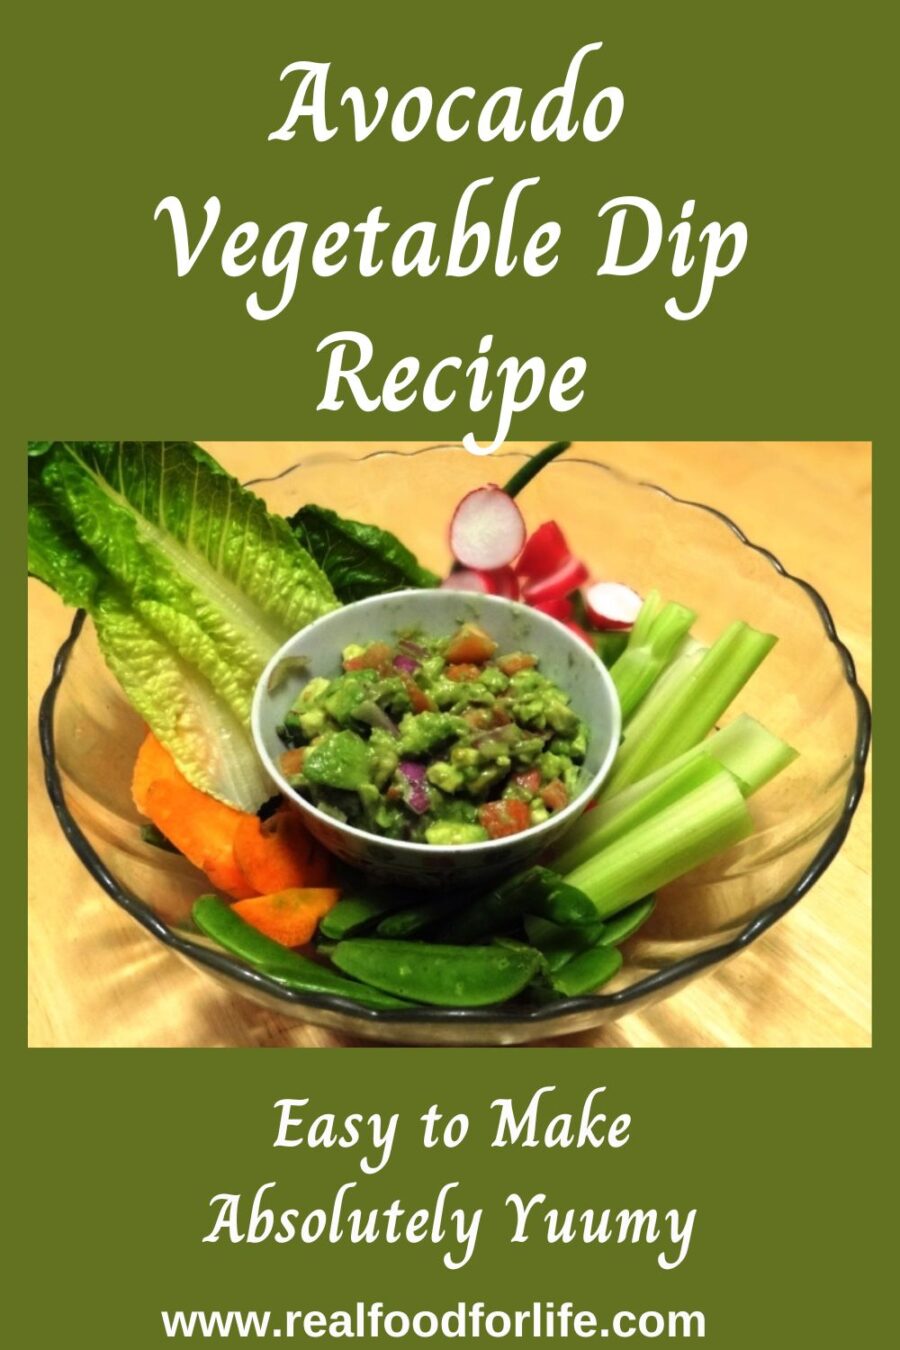 Avocado Vegetable Dip